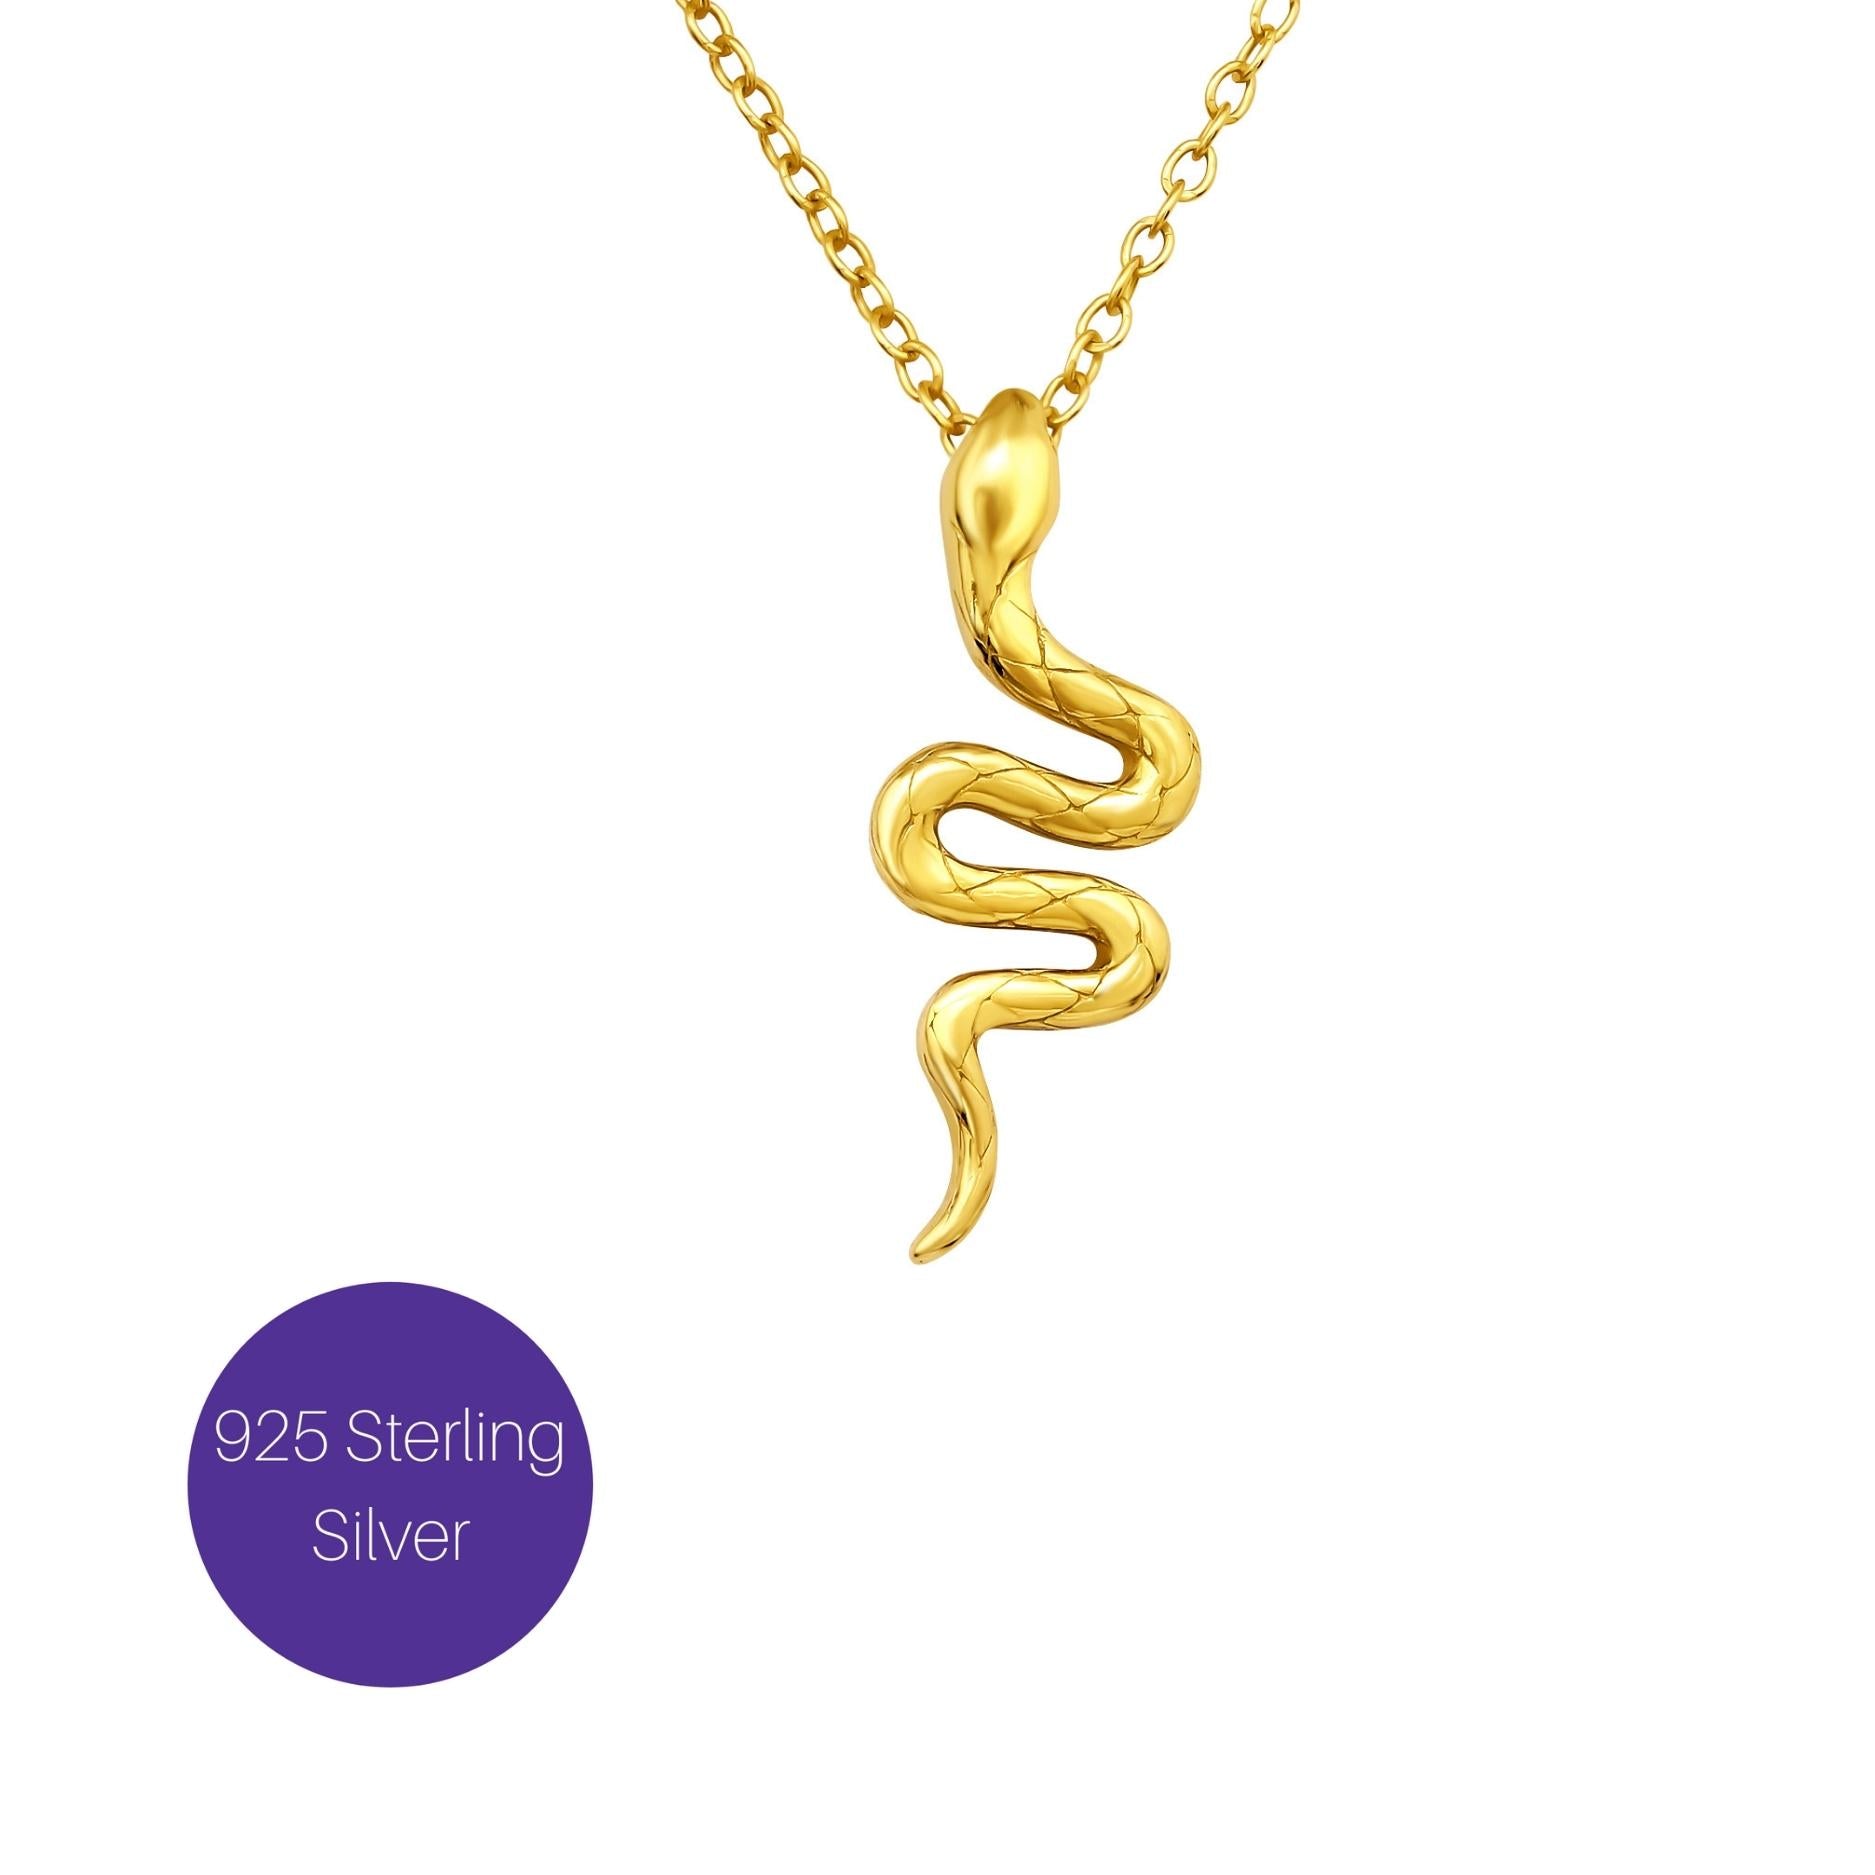 Golden Serpent Necklace